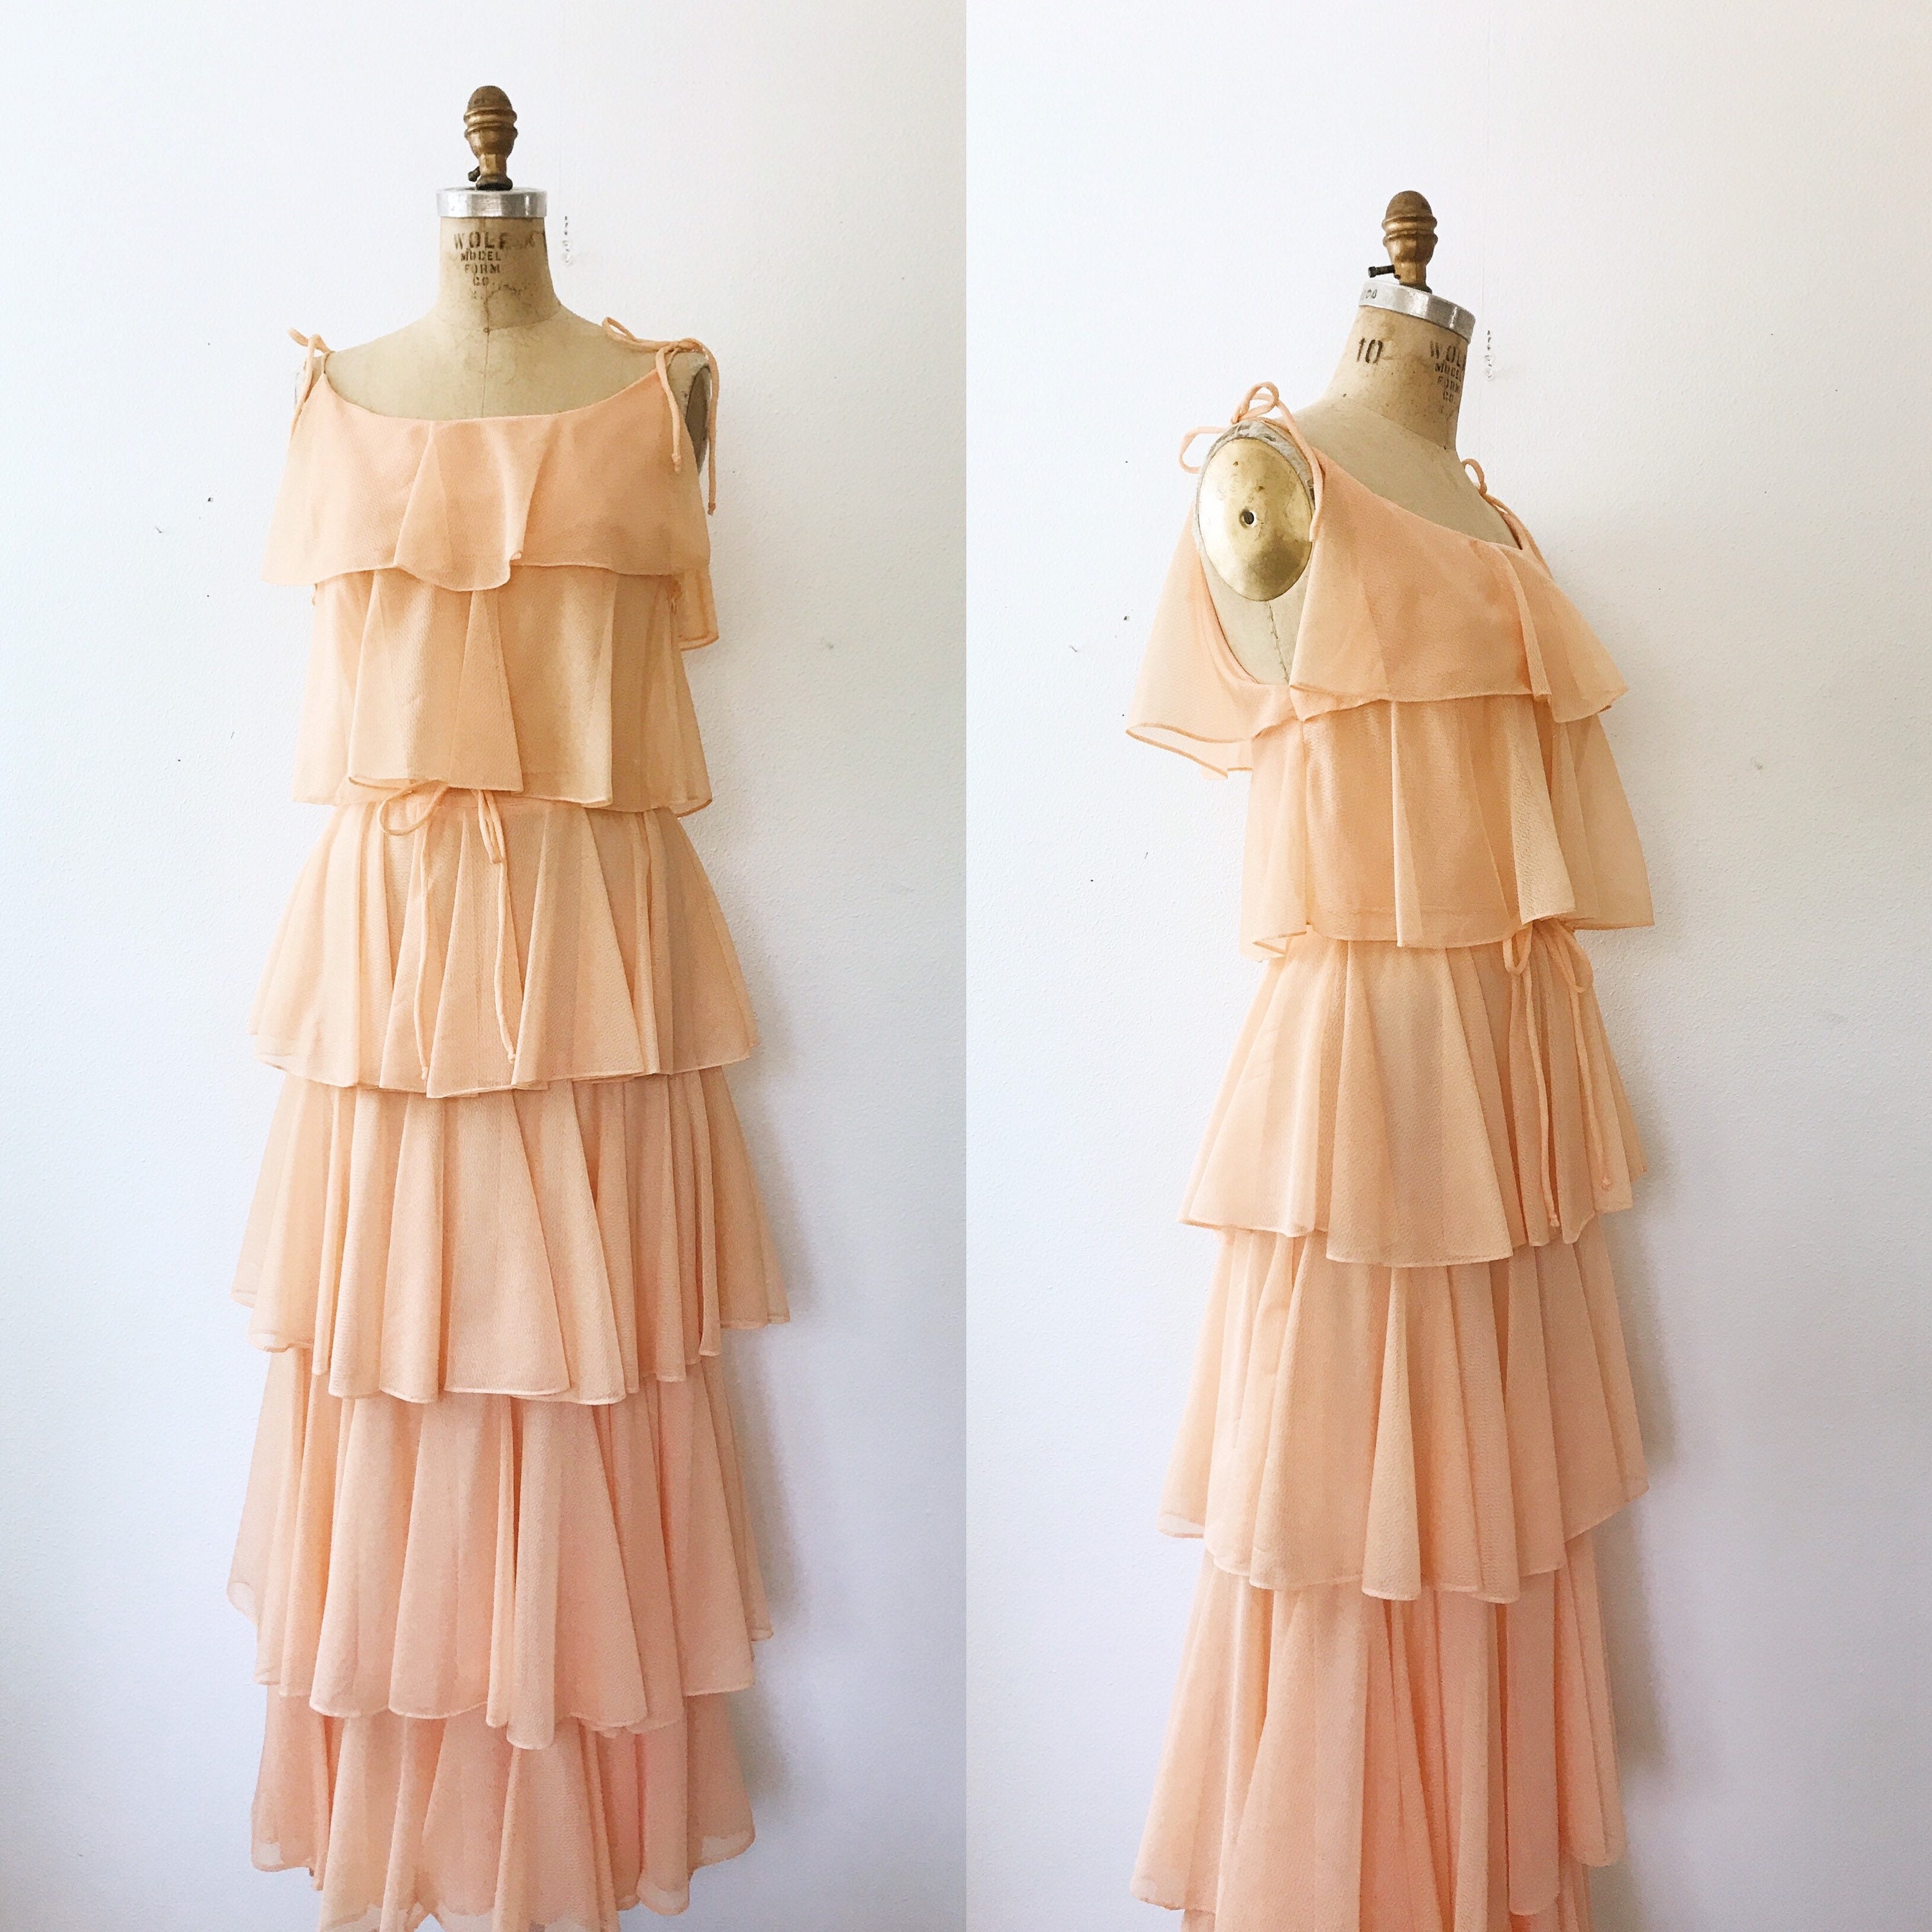 Peach Ruffle dress / Ricasoli dress / 1970s vintage dress